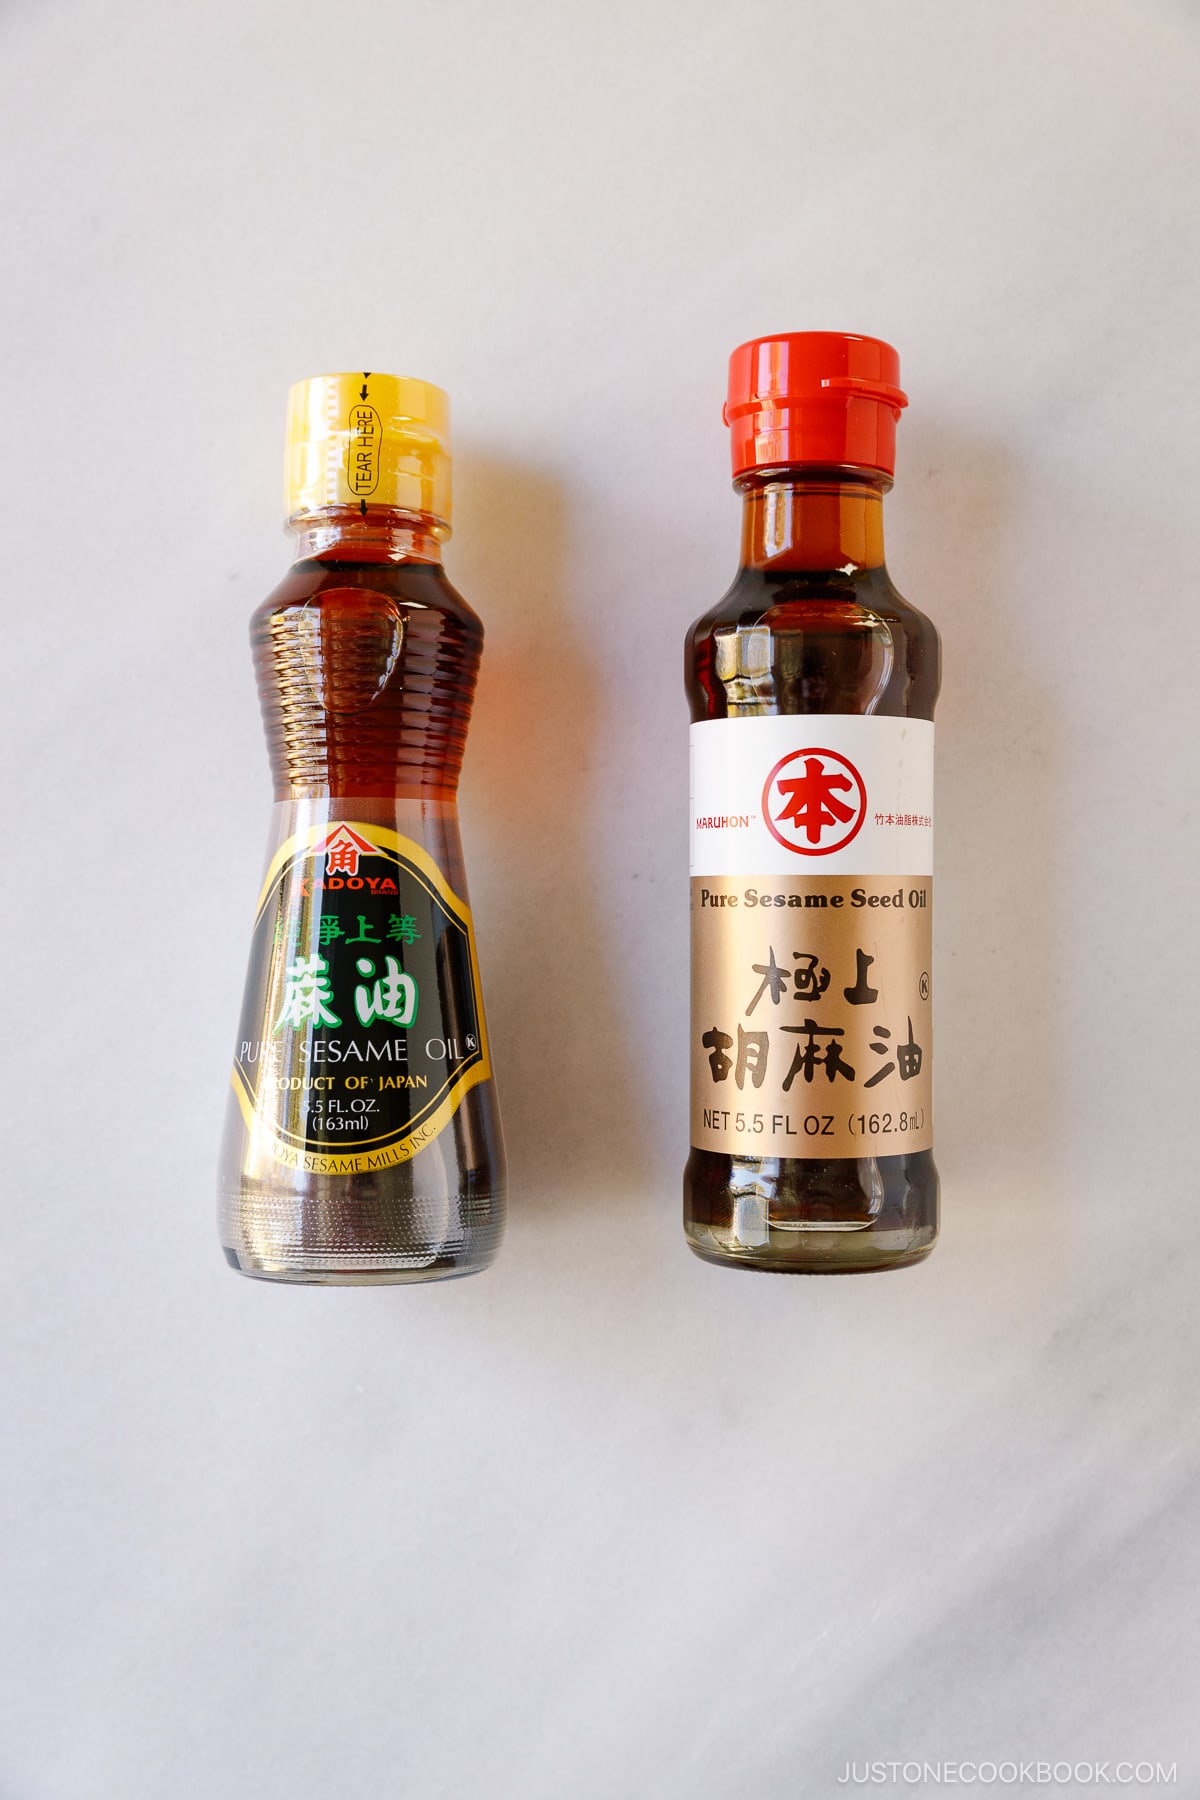 Japanese Toasted Sesame Oil